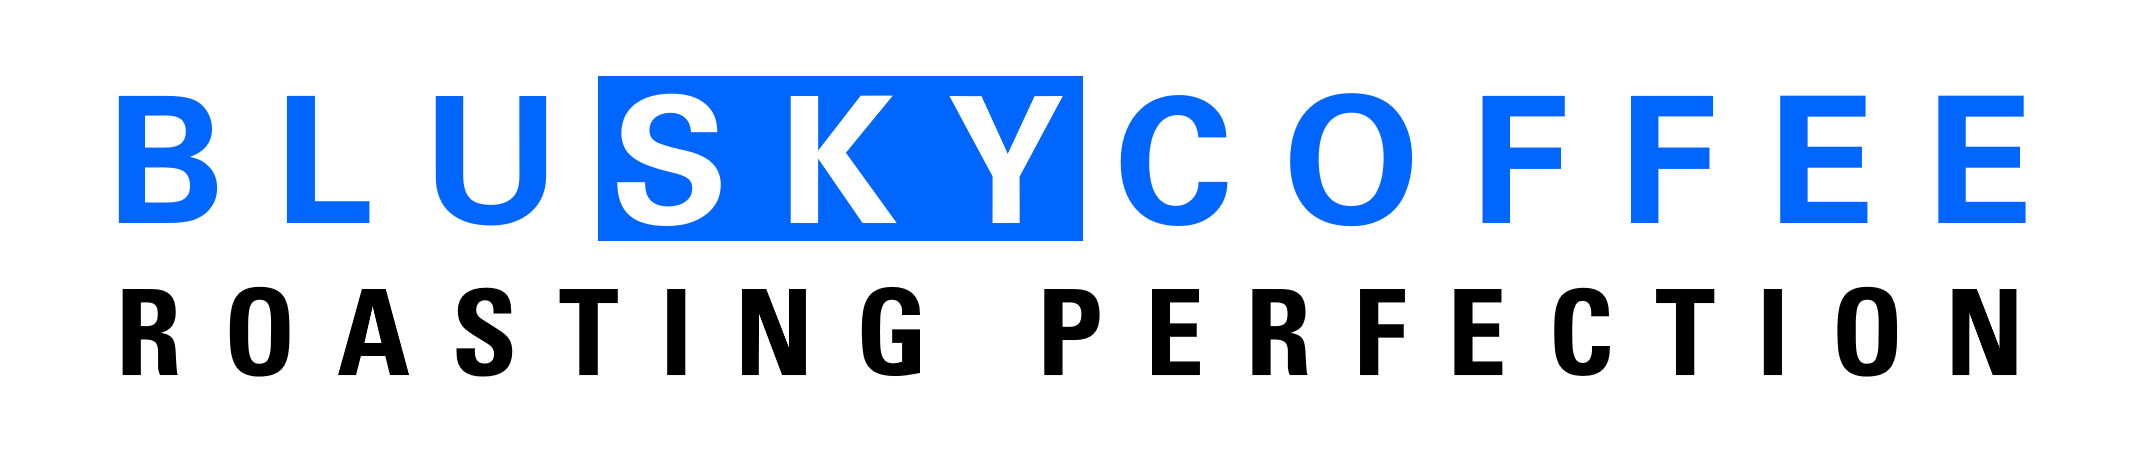 BLU Sky Logo.png